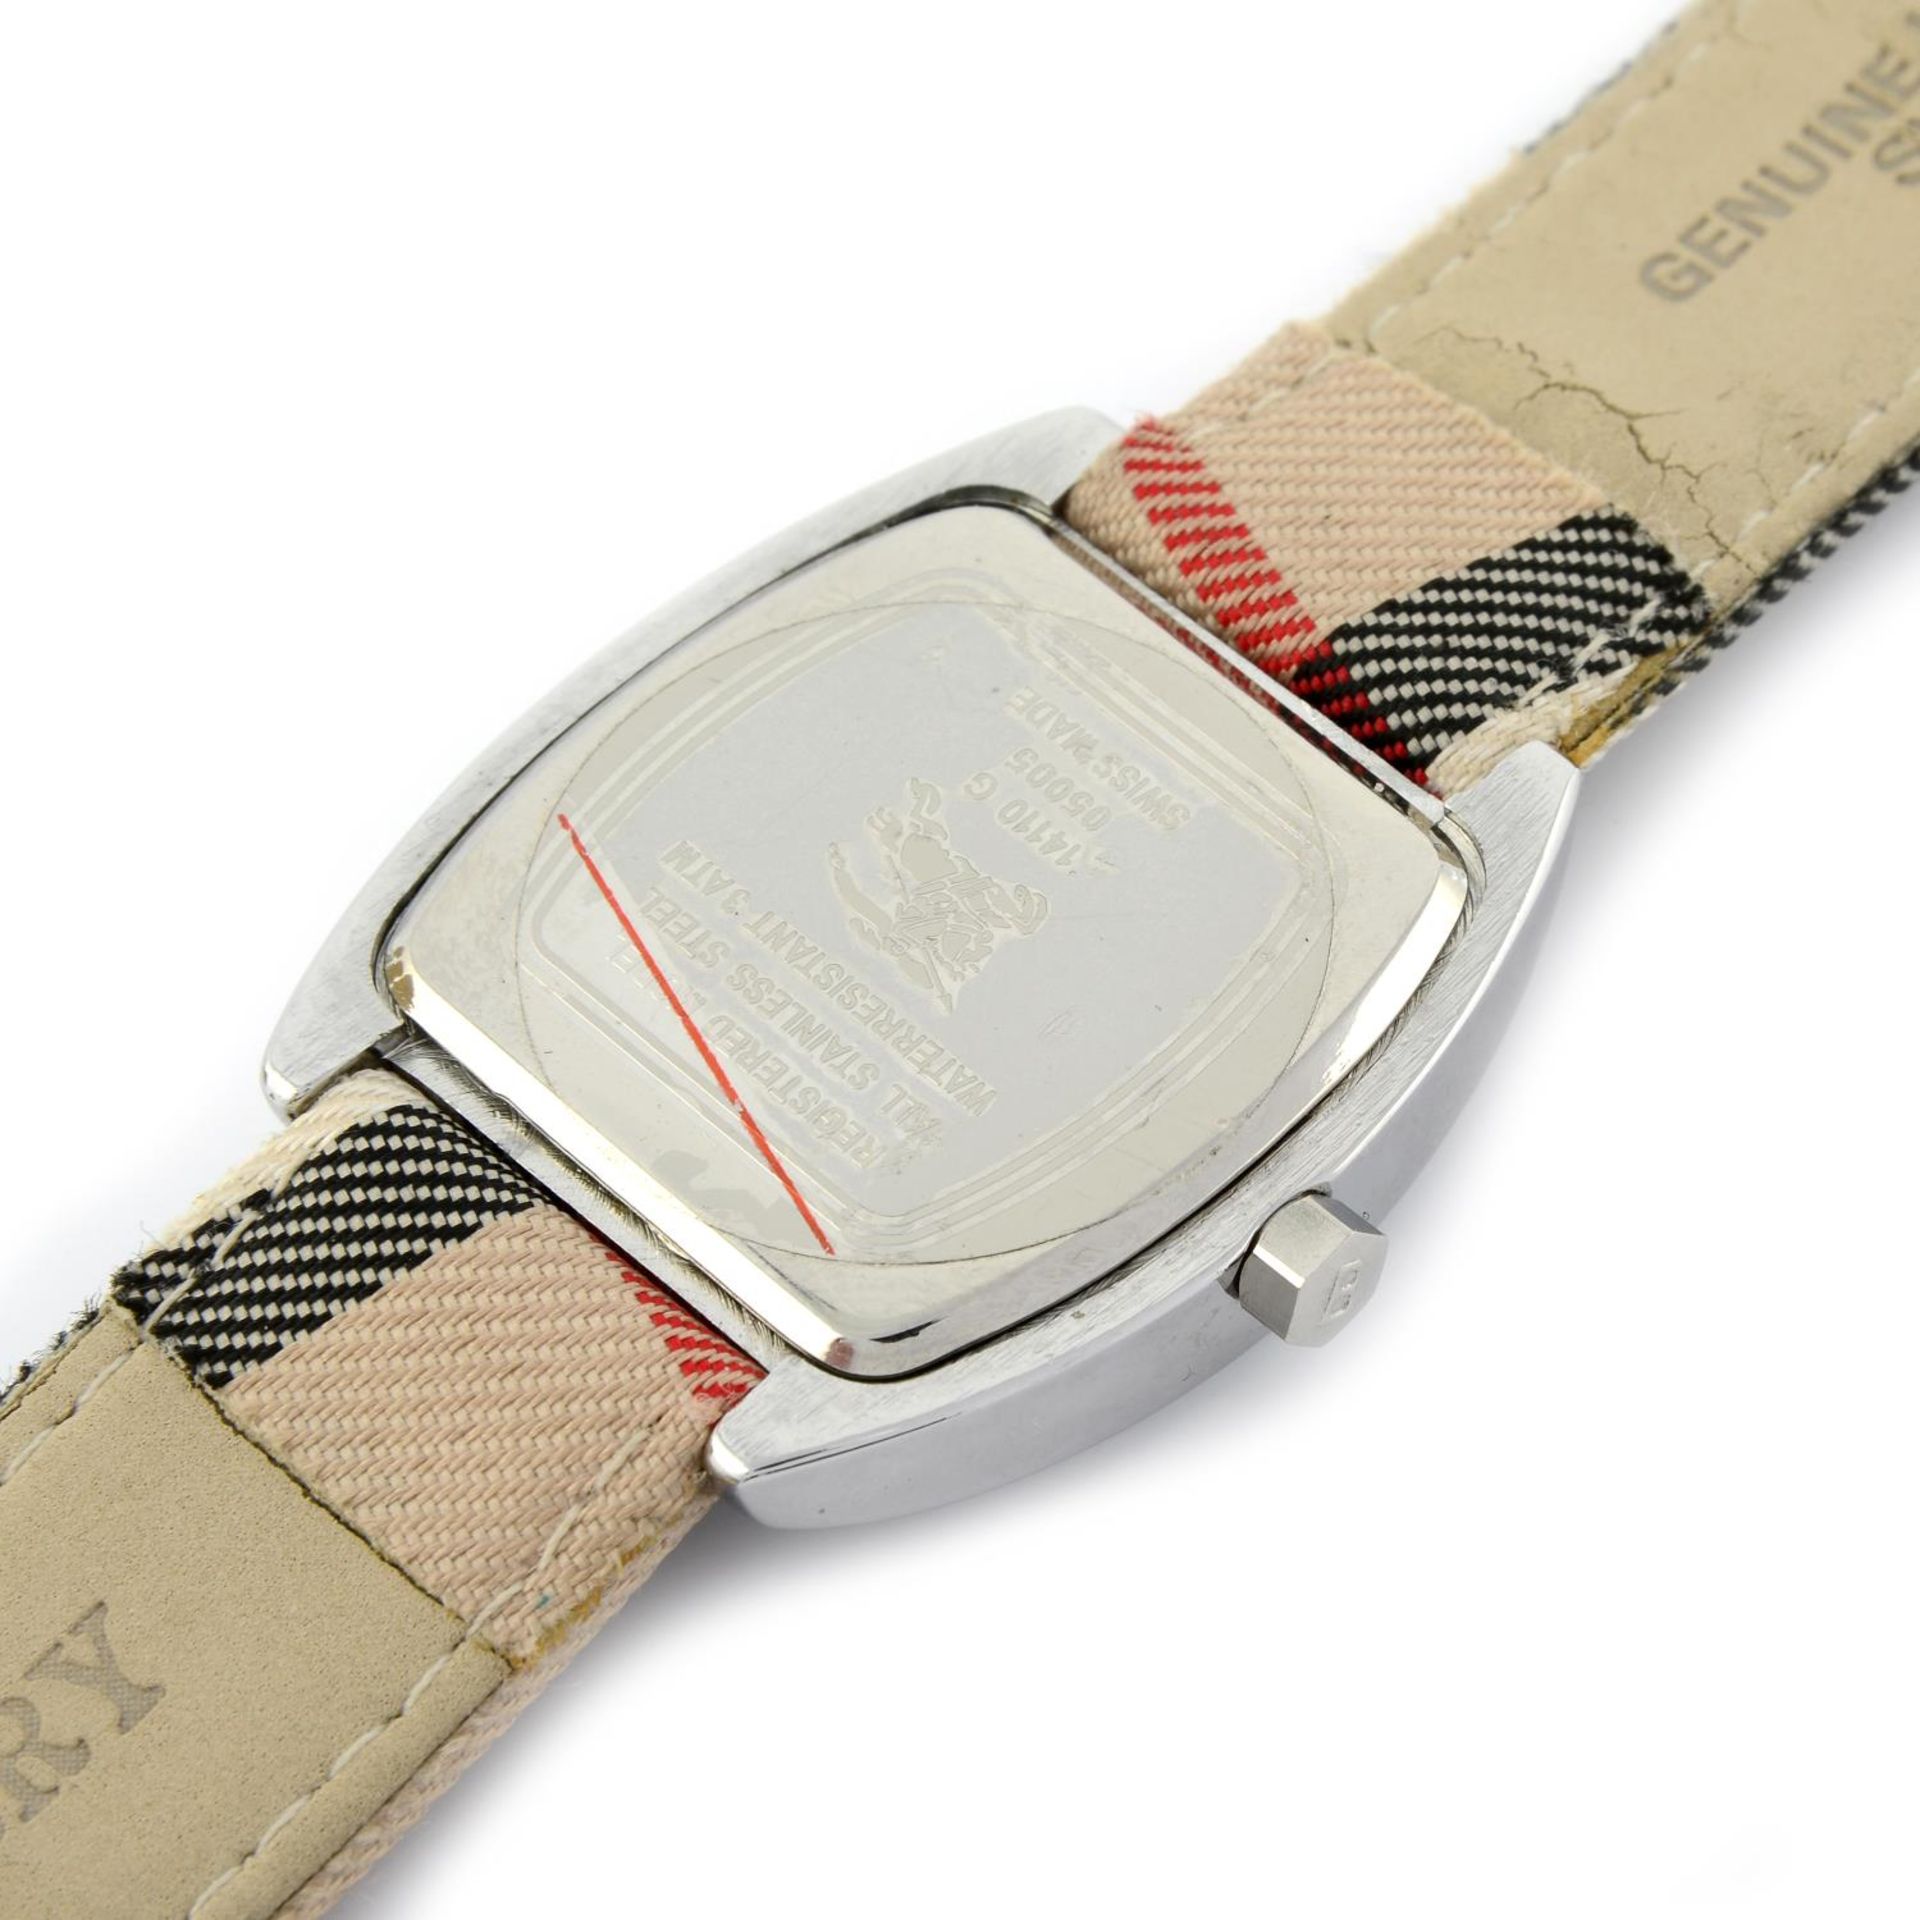 BURBERRY - a Nova Check wrist watch. - Image 4 of 4